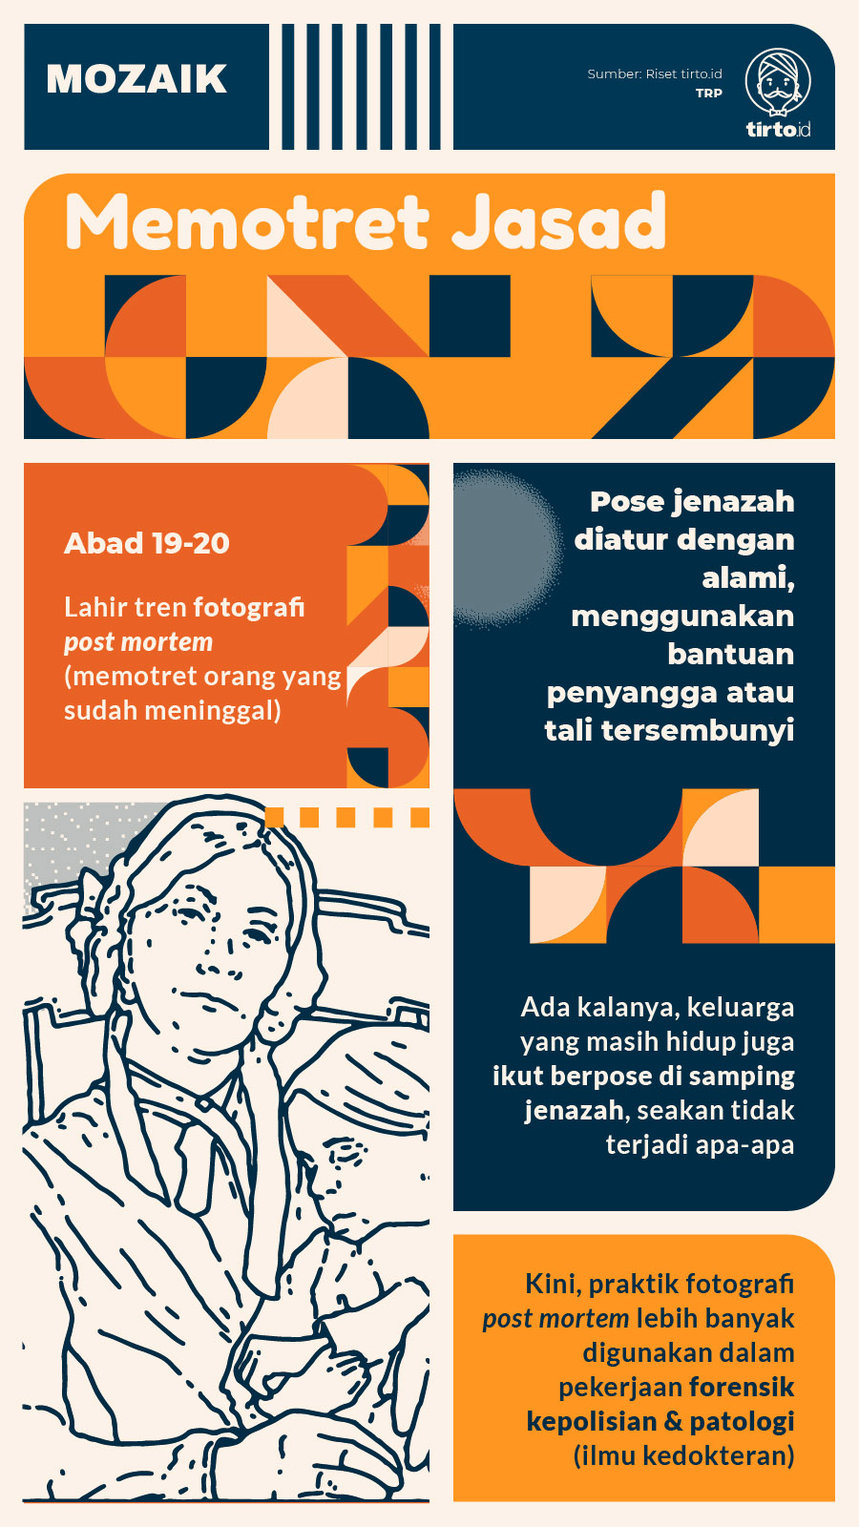 Infografik Mozaik Memotret Jasad